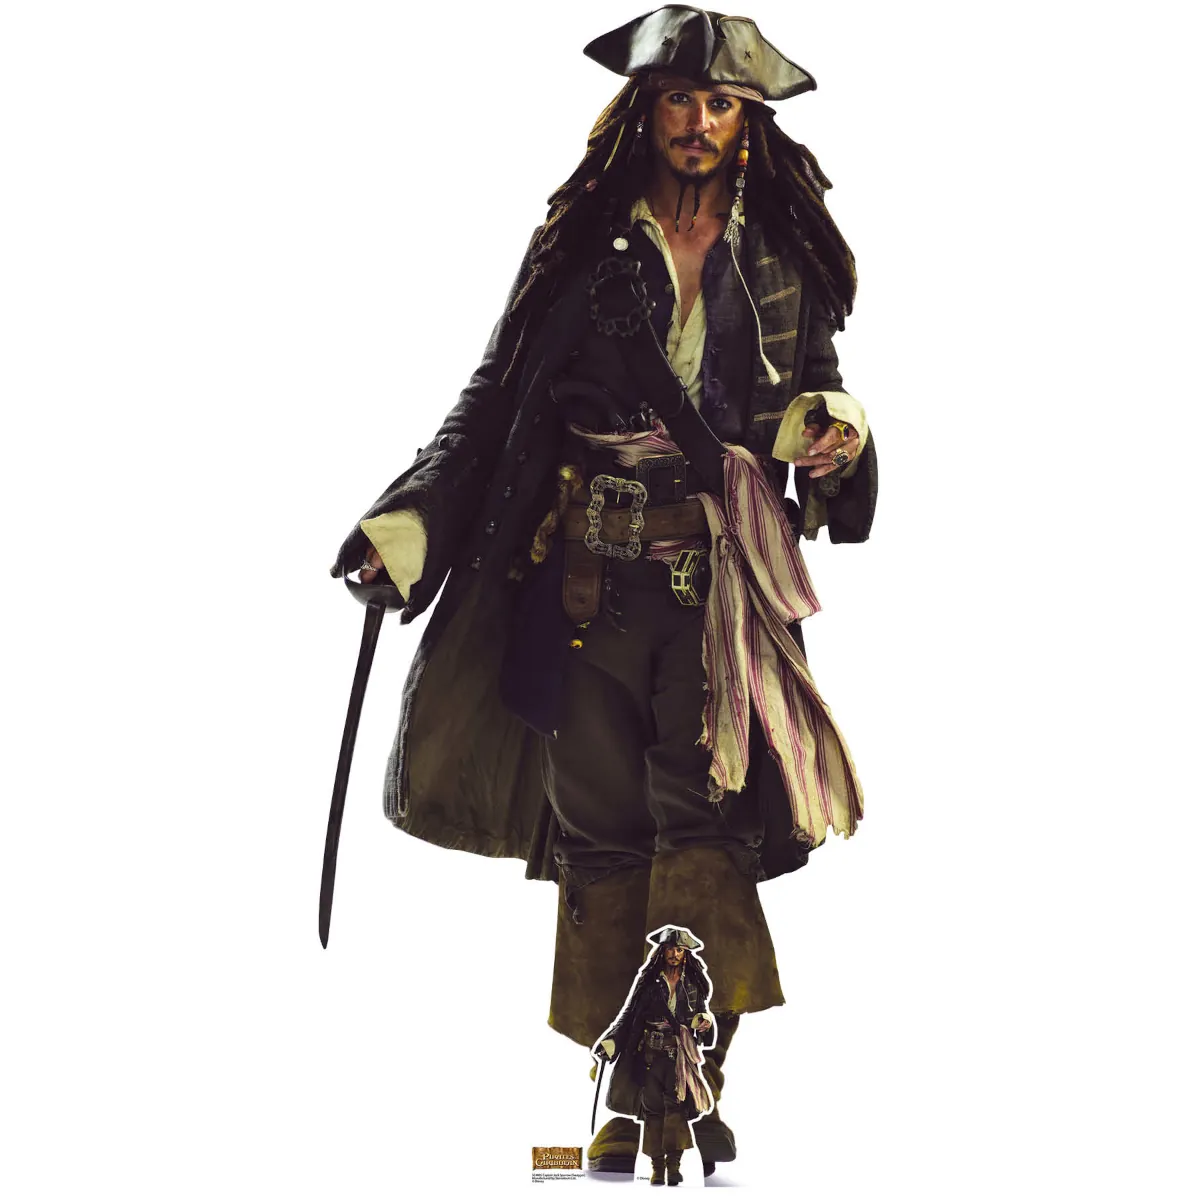 SC4405 Captain Jack Sparrow 'Johnny Depp' (Pirates of the Caribbean) Lifesize + Mini Cardboard Cutout Front